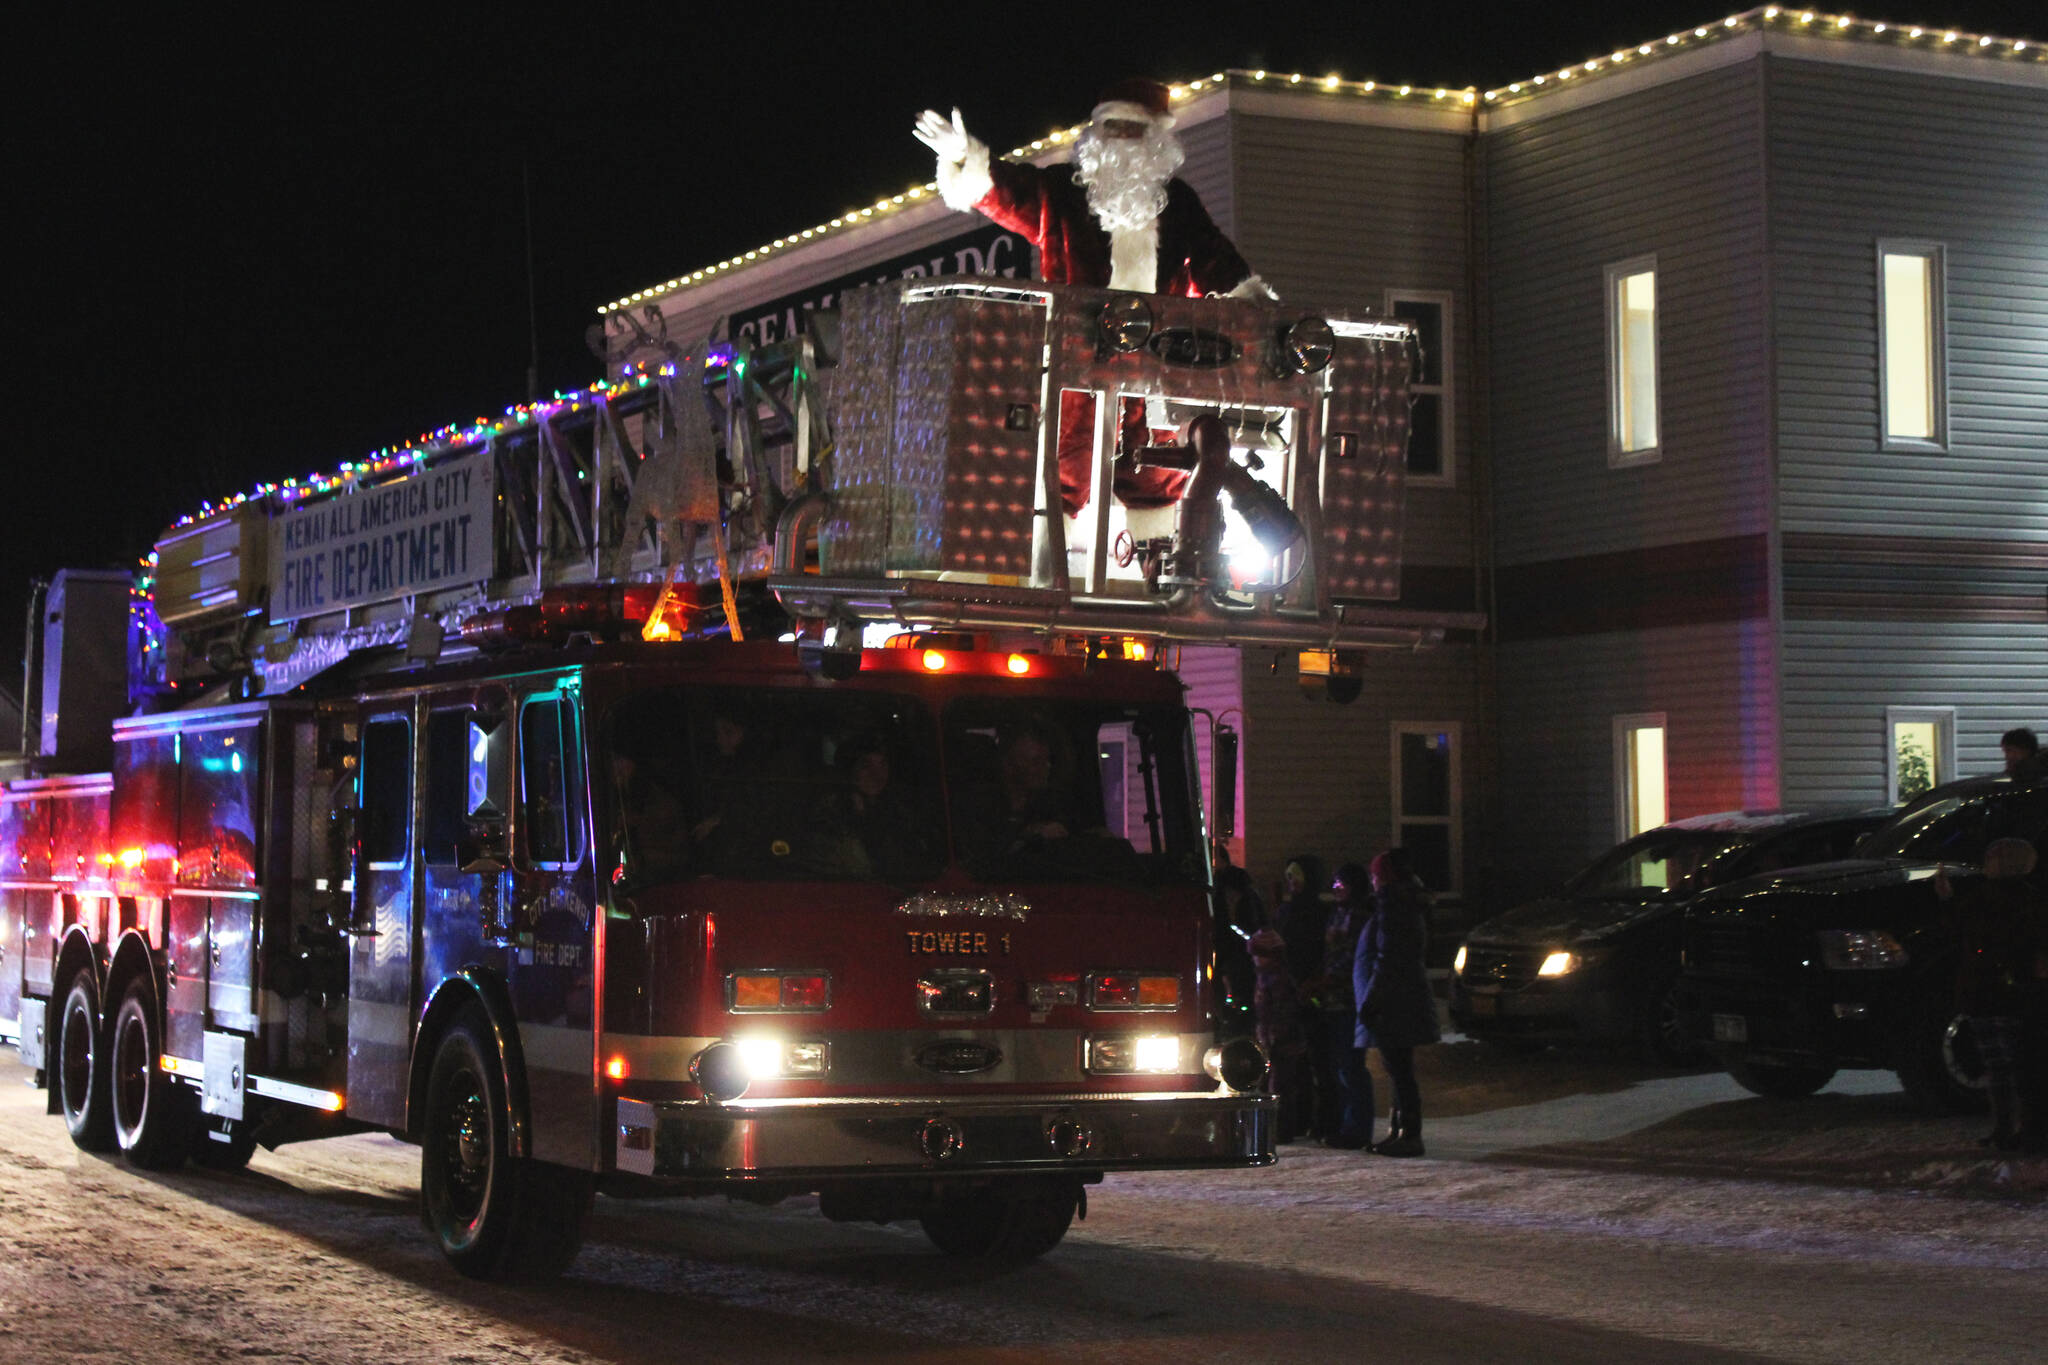 Santa Claus waves from the top of a Kenai Fire Department fire engine during the “Christmas Comes to Kenai” parade on Friday, Nov. 26, 2021 in Kenai, Alaska. (Ashlyn O’Hara/Peninsula Clarion)